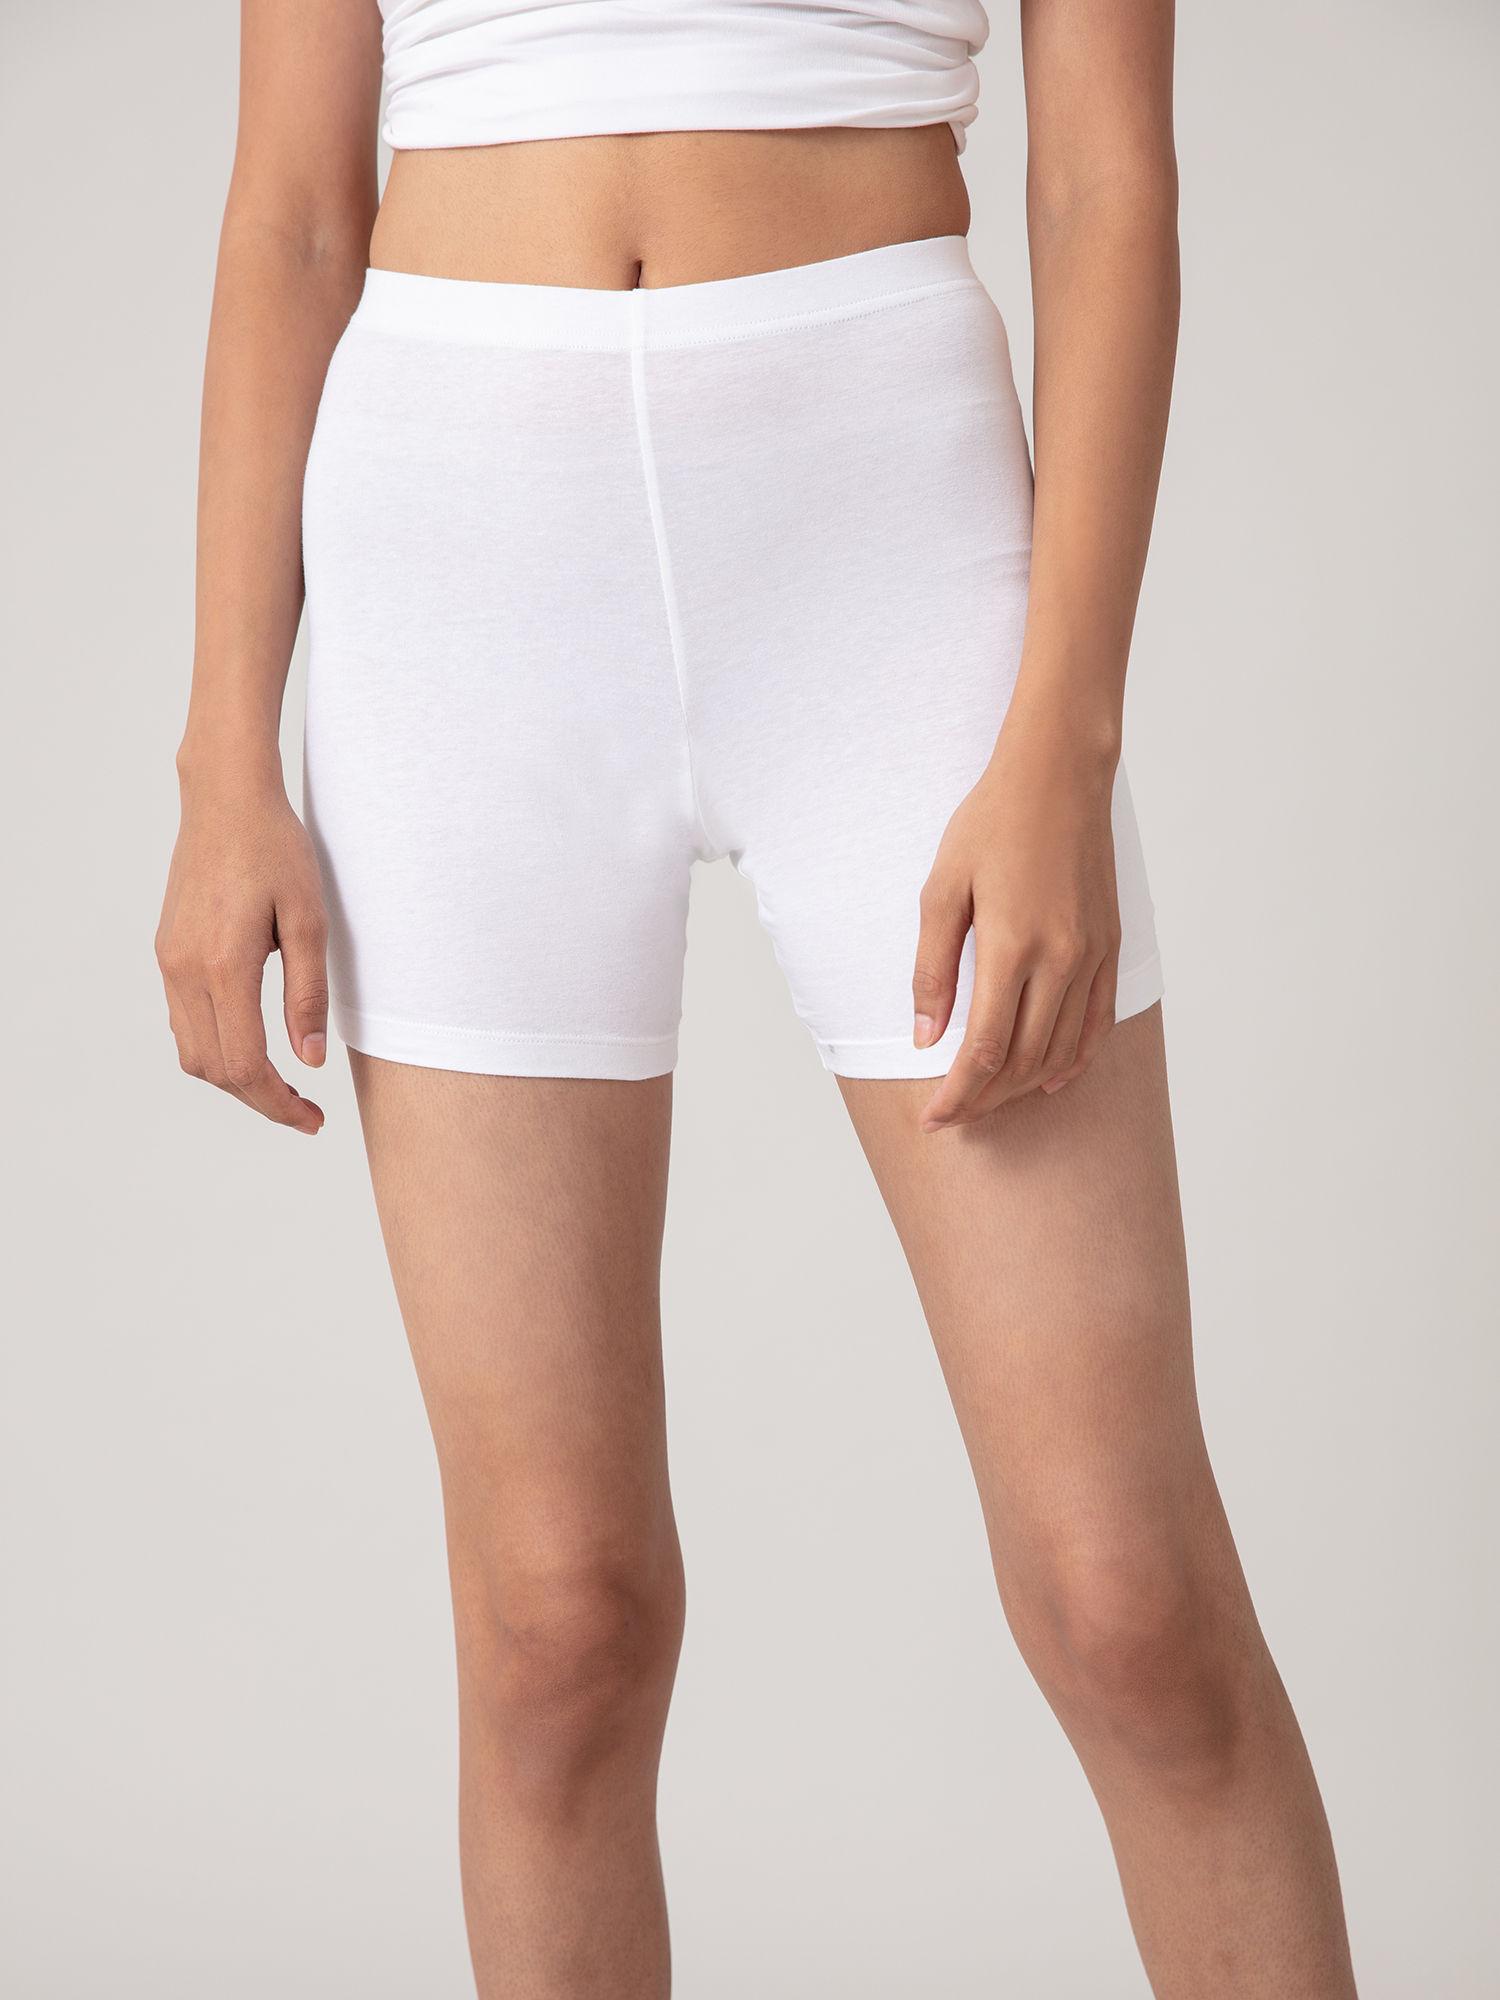 stretch cotton cycling shorts - nyp083 - white